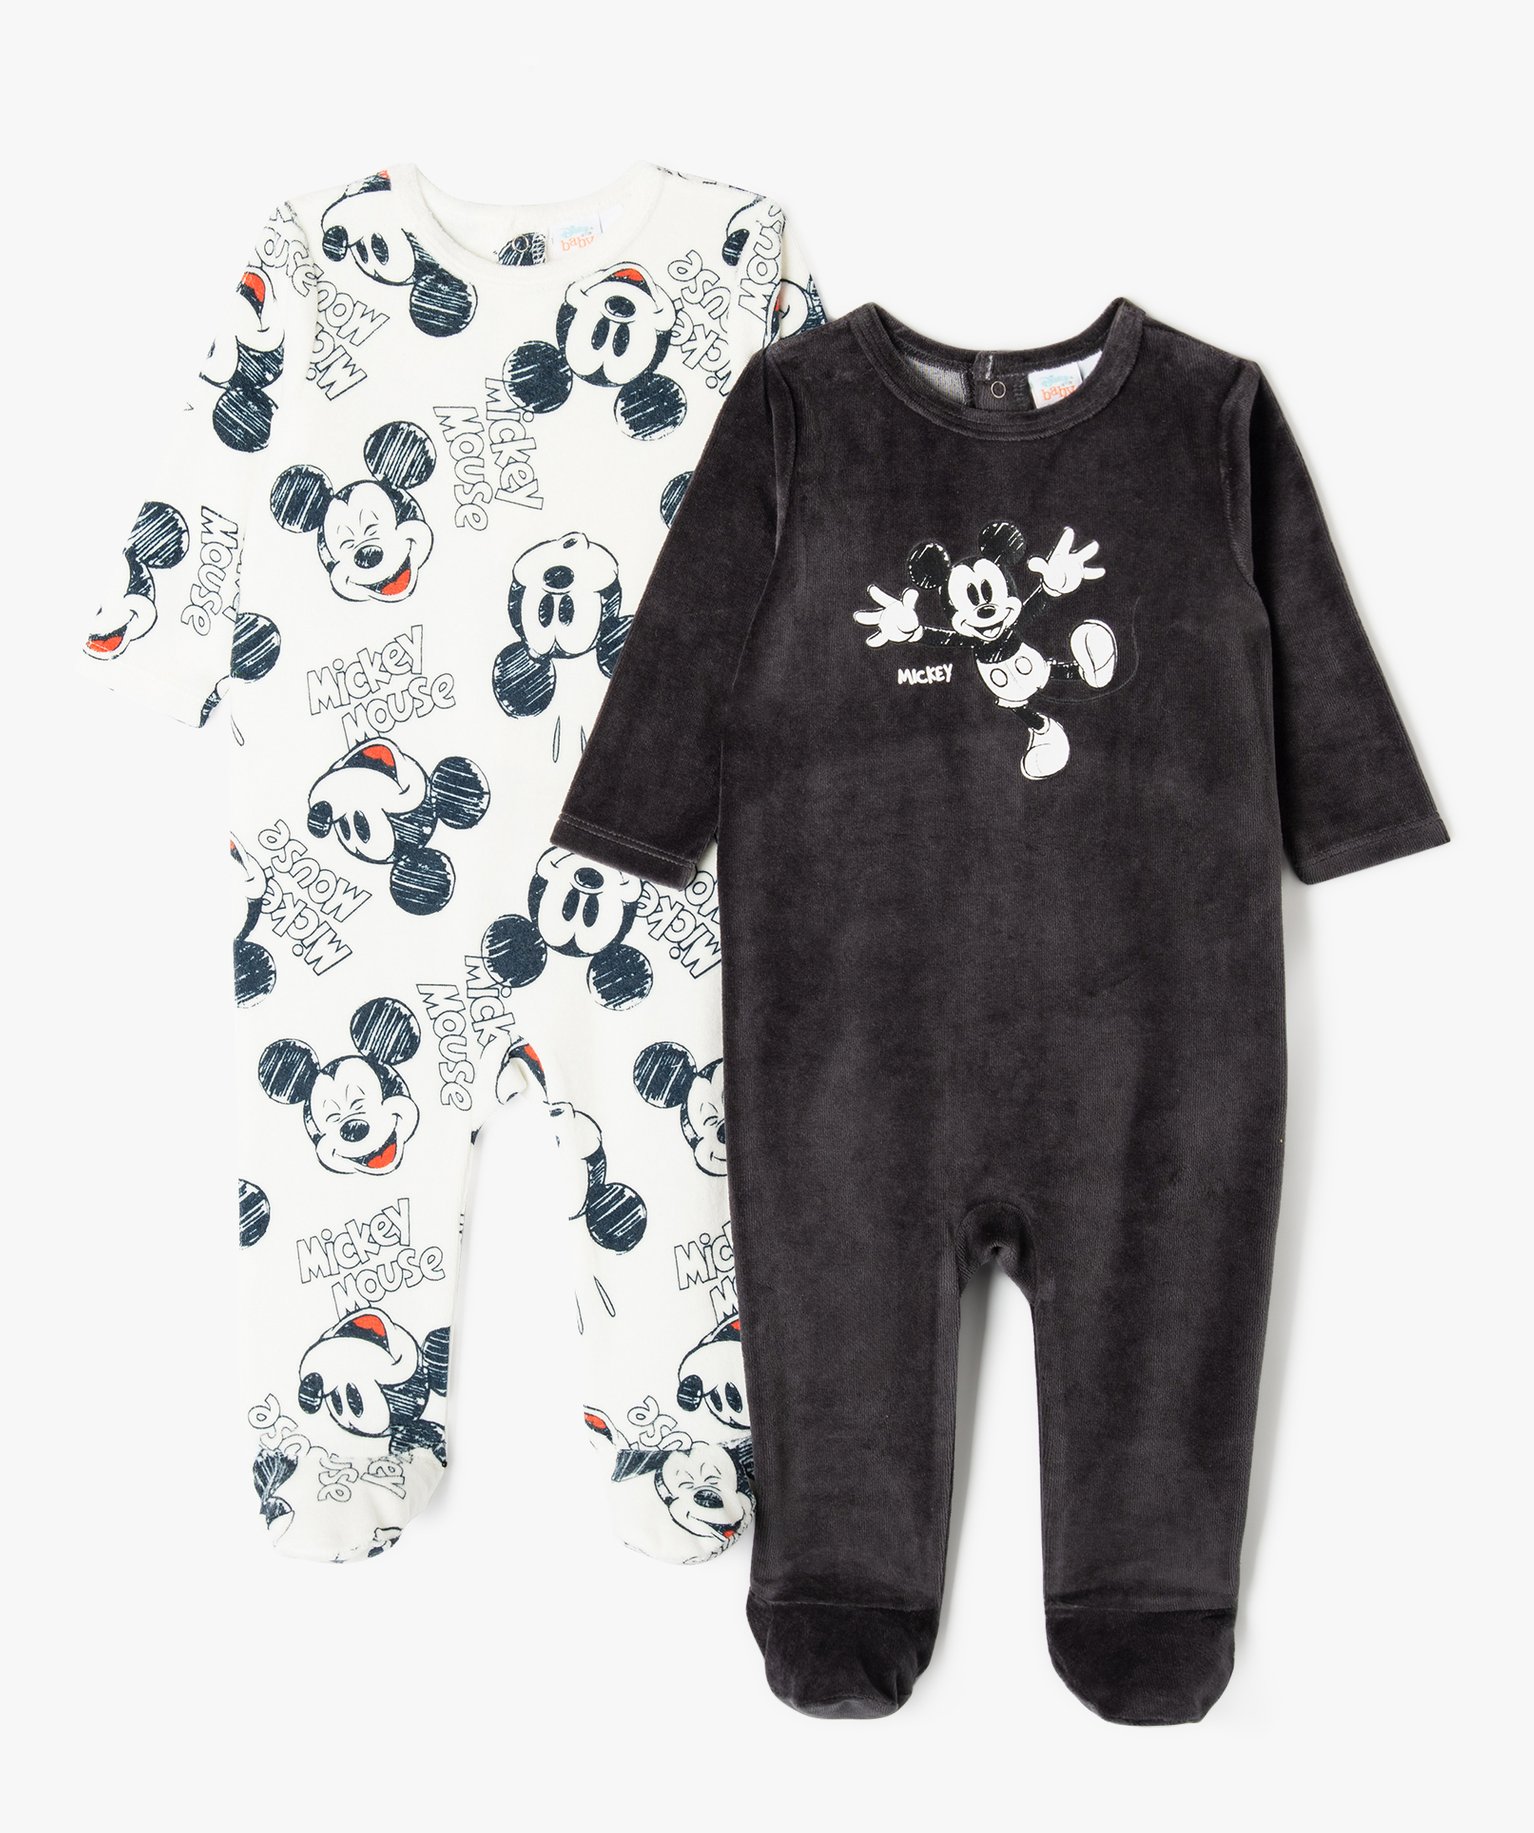 Pyjama velours avec motifs Mickey Mouse bébé garçon (lot de 2) - Disney Baby - 1M - gris fonce - DISNEY BABY